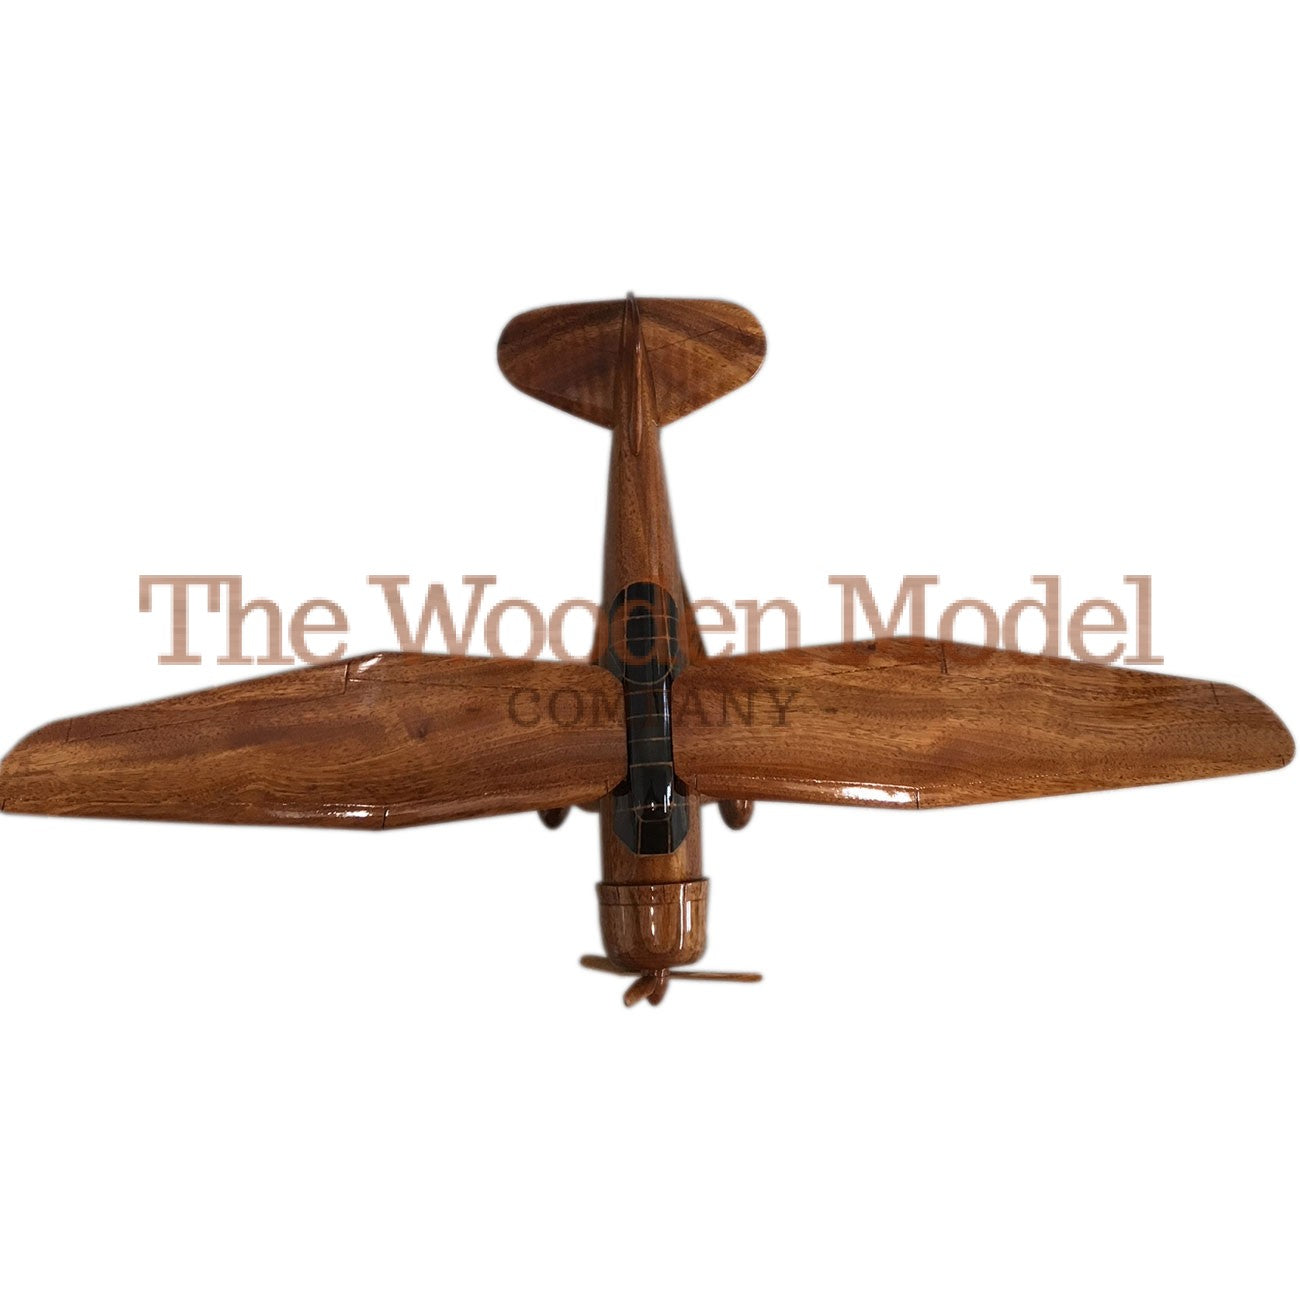 Westland Lysander British Army Royal Air Force WW2 Co-Operation Liaison Aircraft Wooden Desktop Model